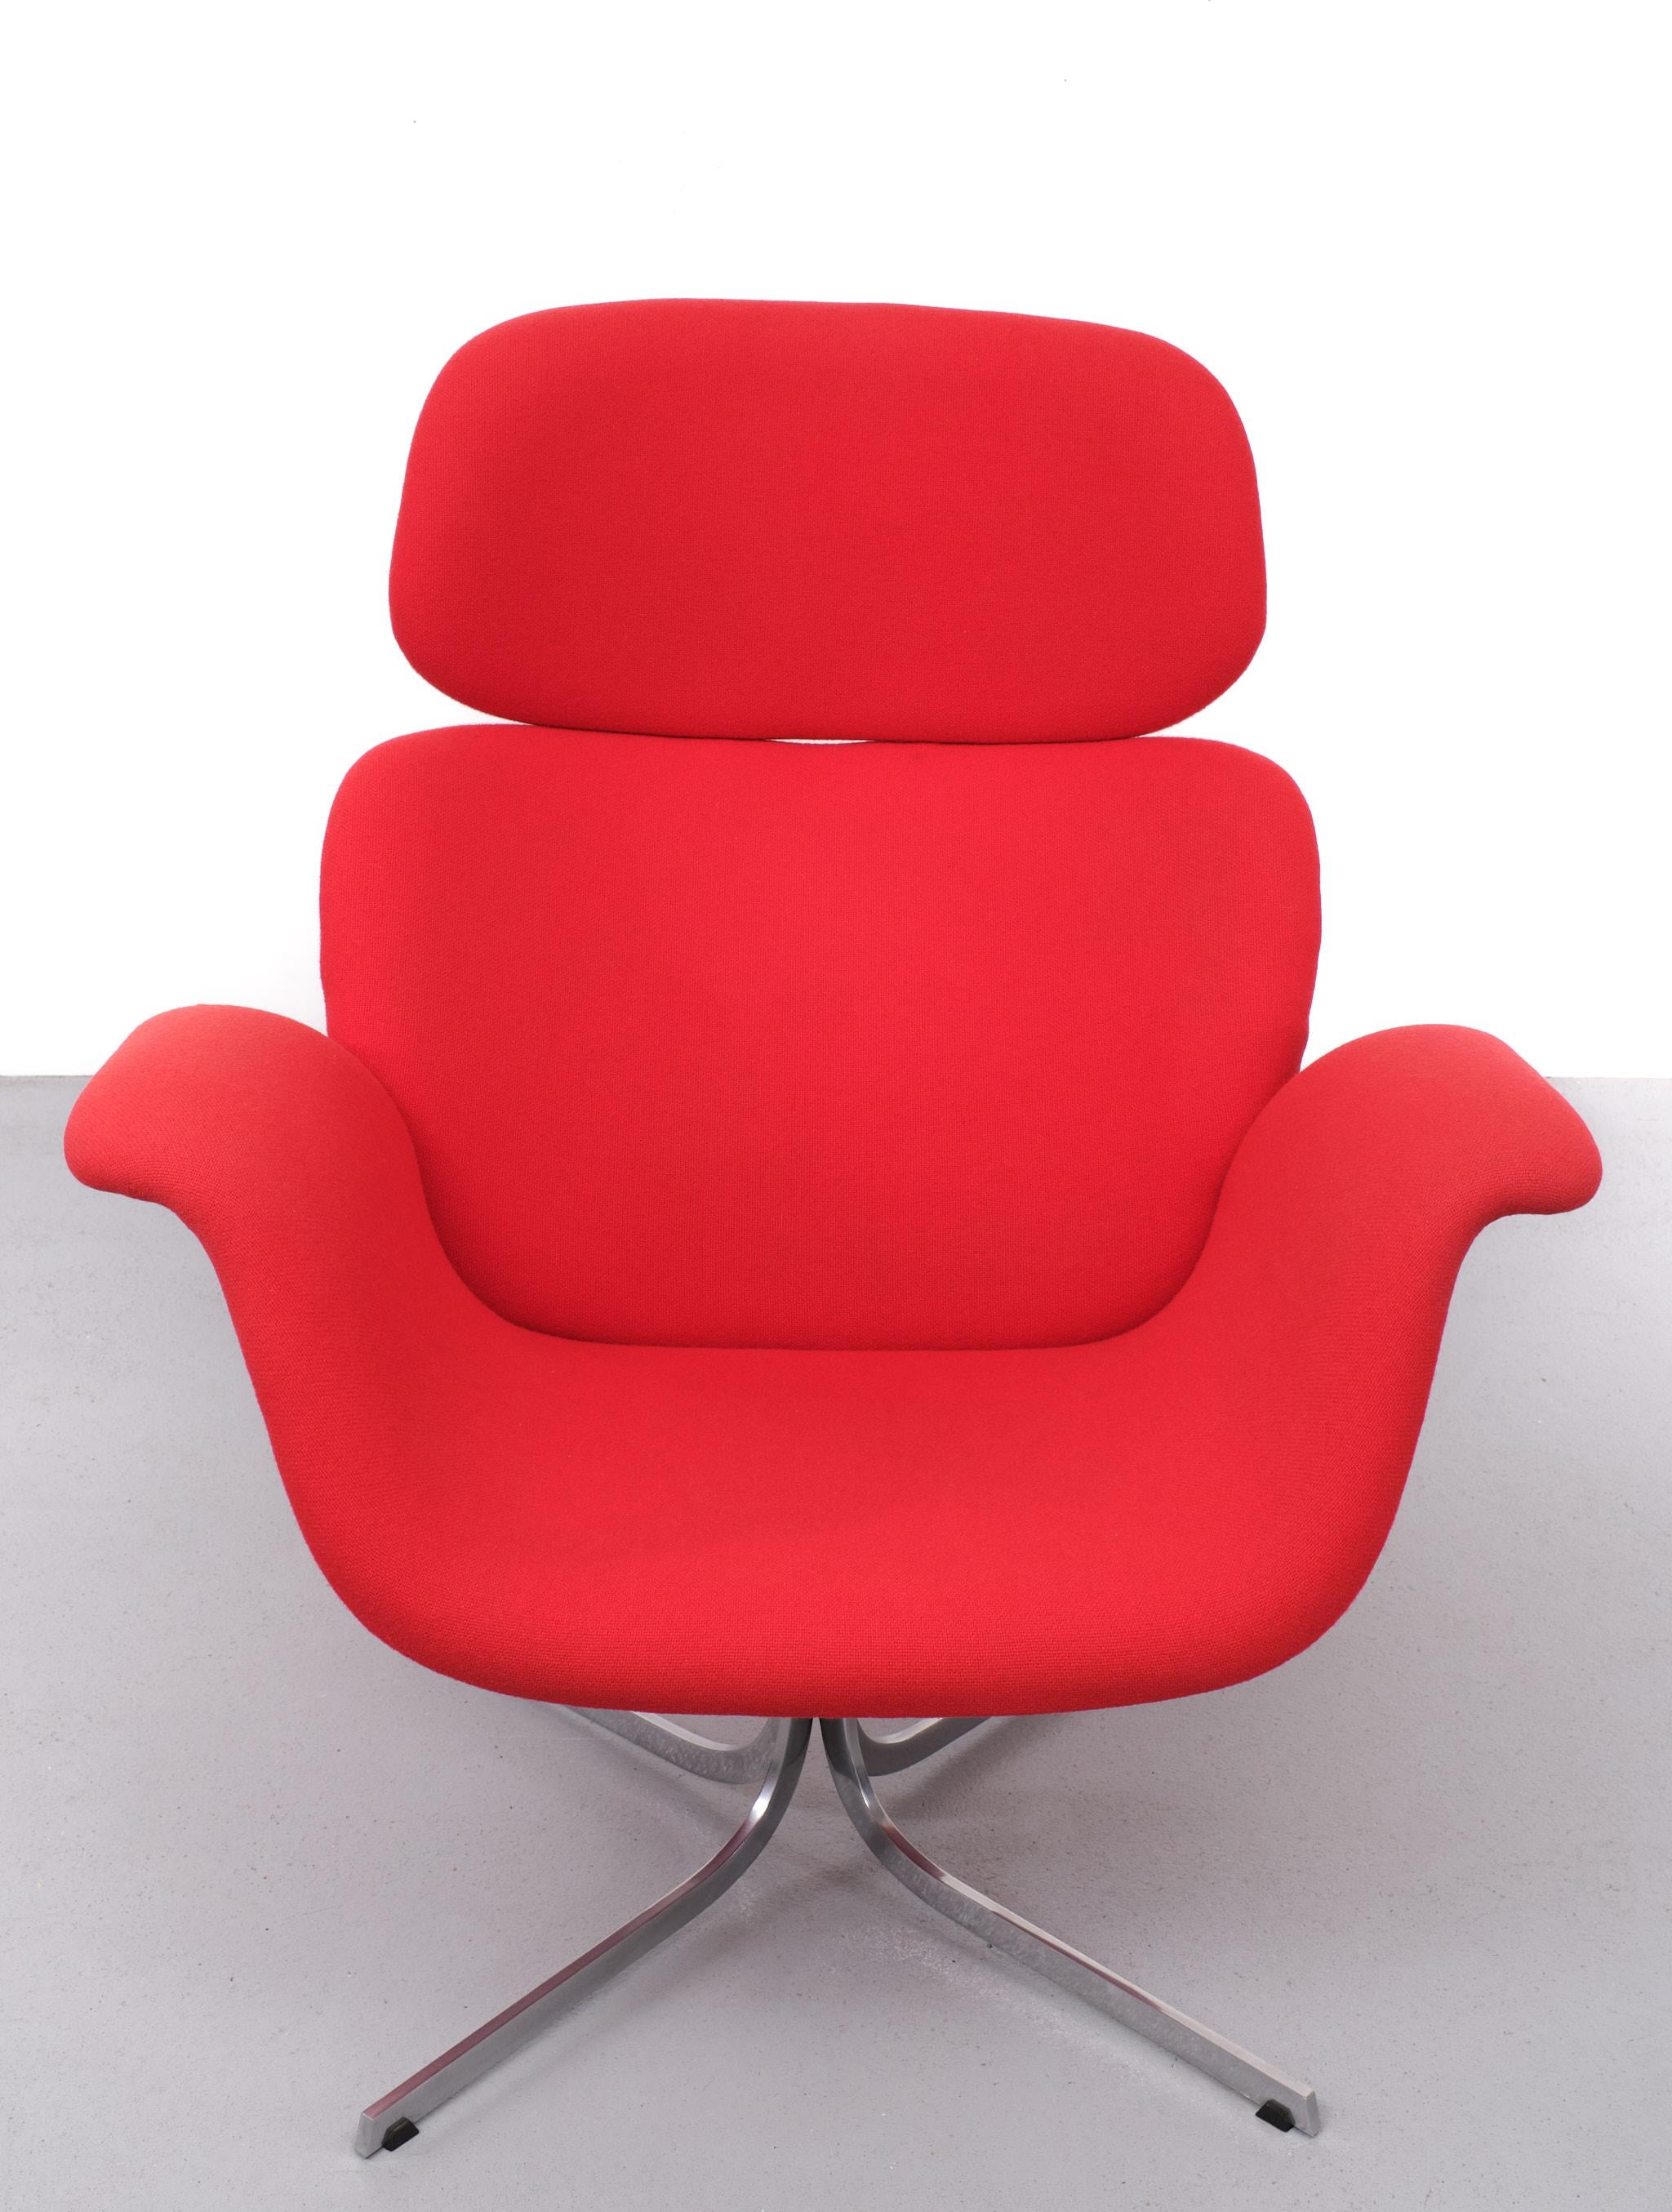 Pierre Paulin  Lounge chair '' Big Tulip ''  Artifort   1960s   For Sale 3